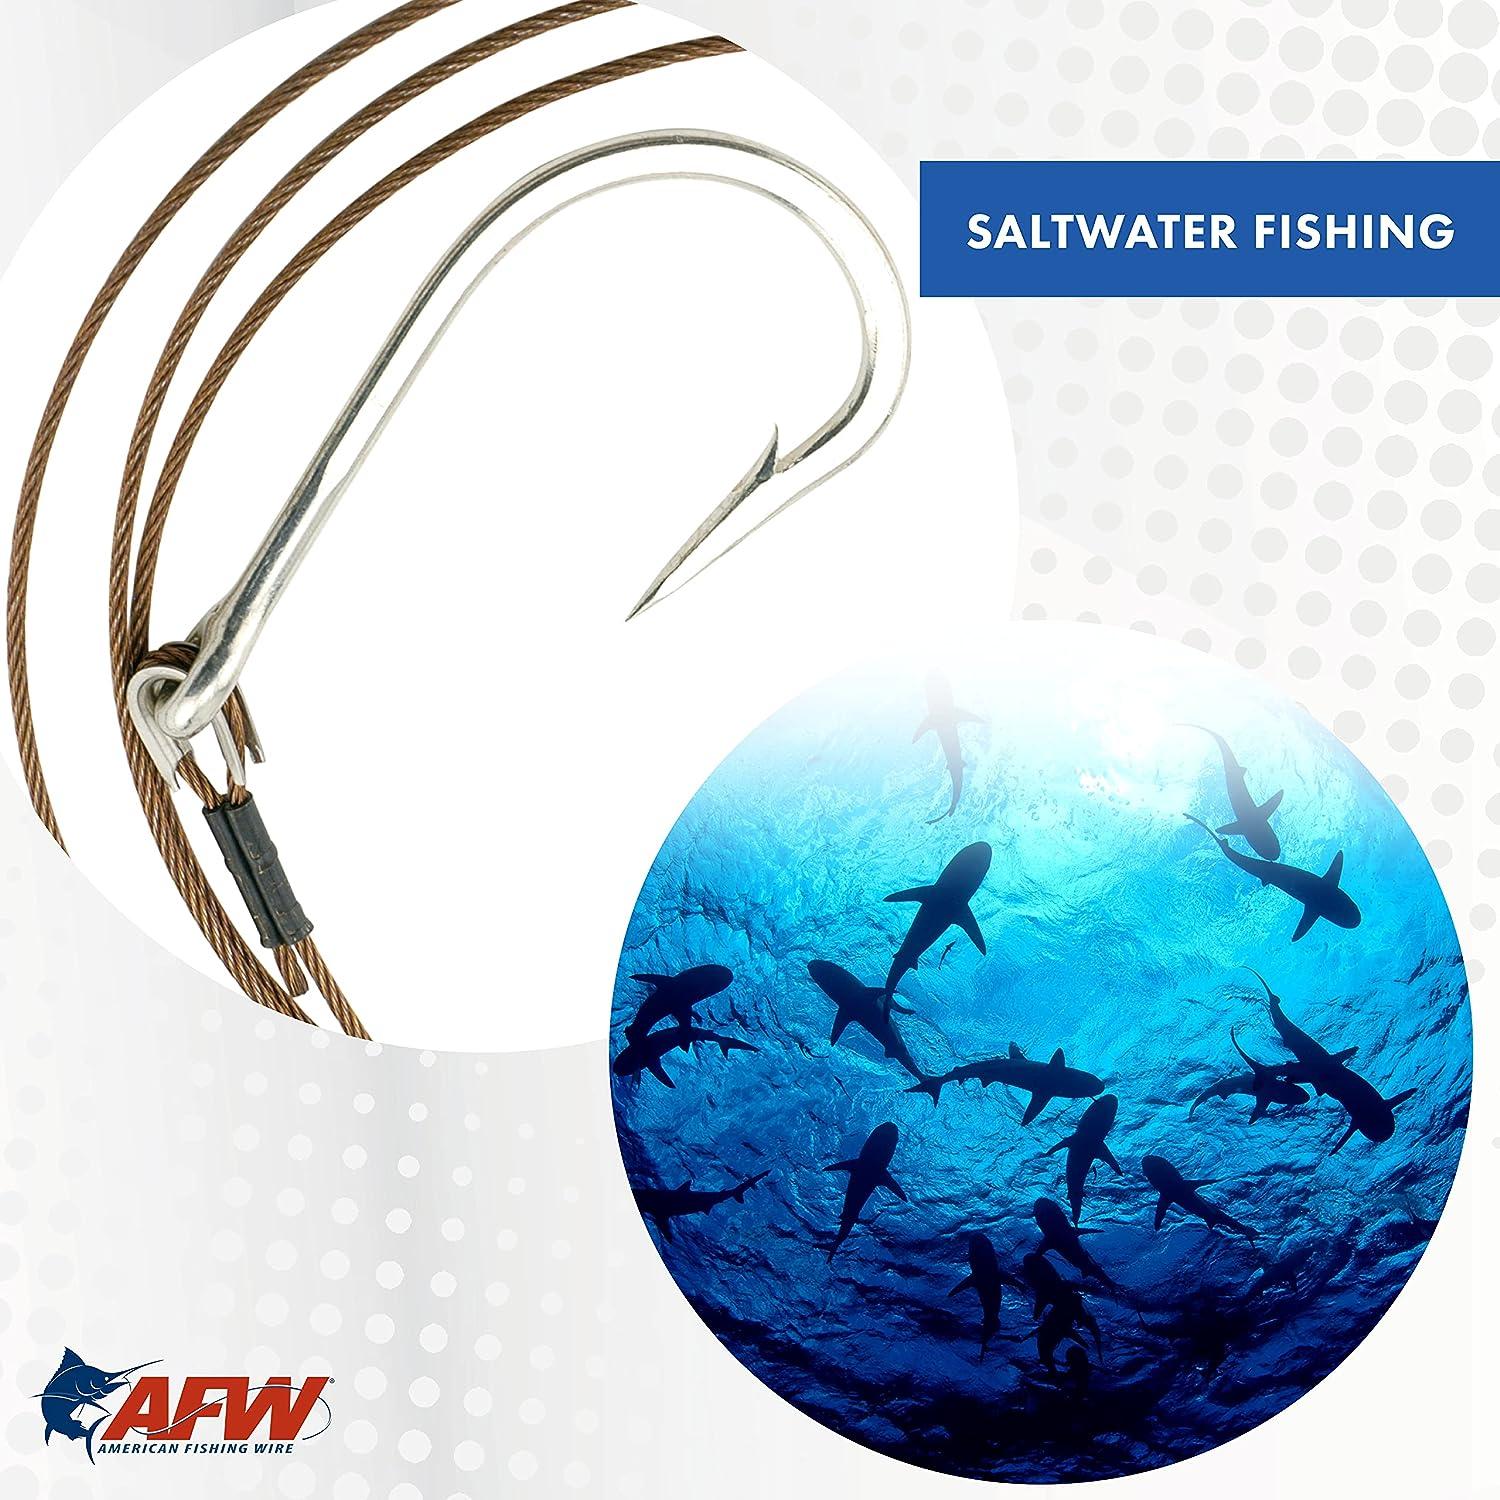 American fishing wire stainless steel trolling wire - Sport